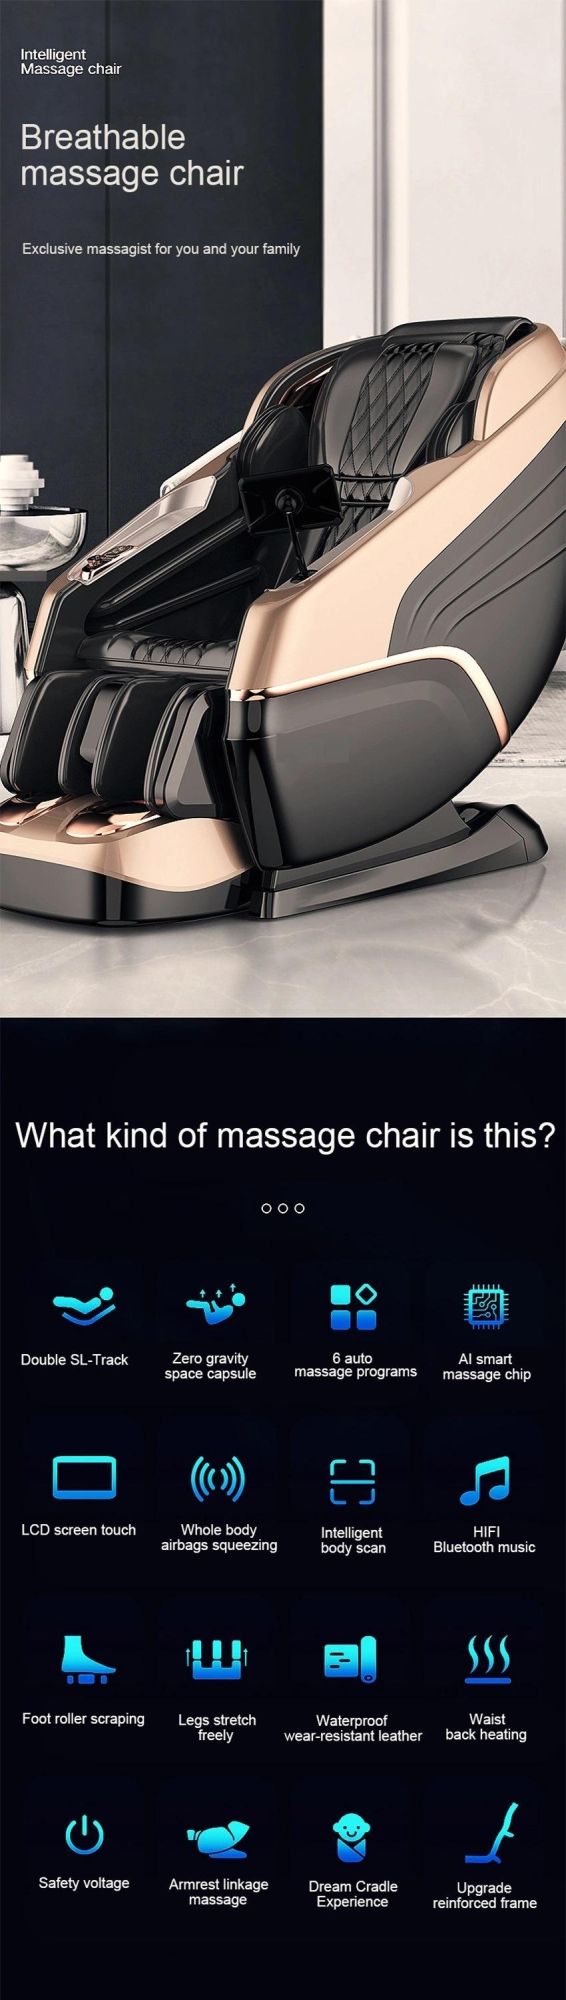 Sauron 888 Electric Office Body Care Massage Sofa Chair Shiatsu SL Track Robotic Massage Chair